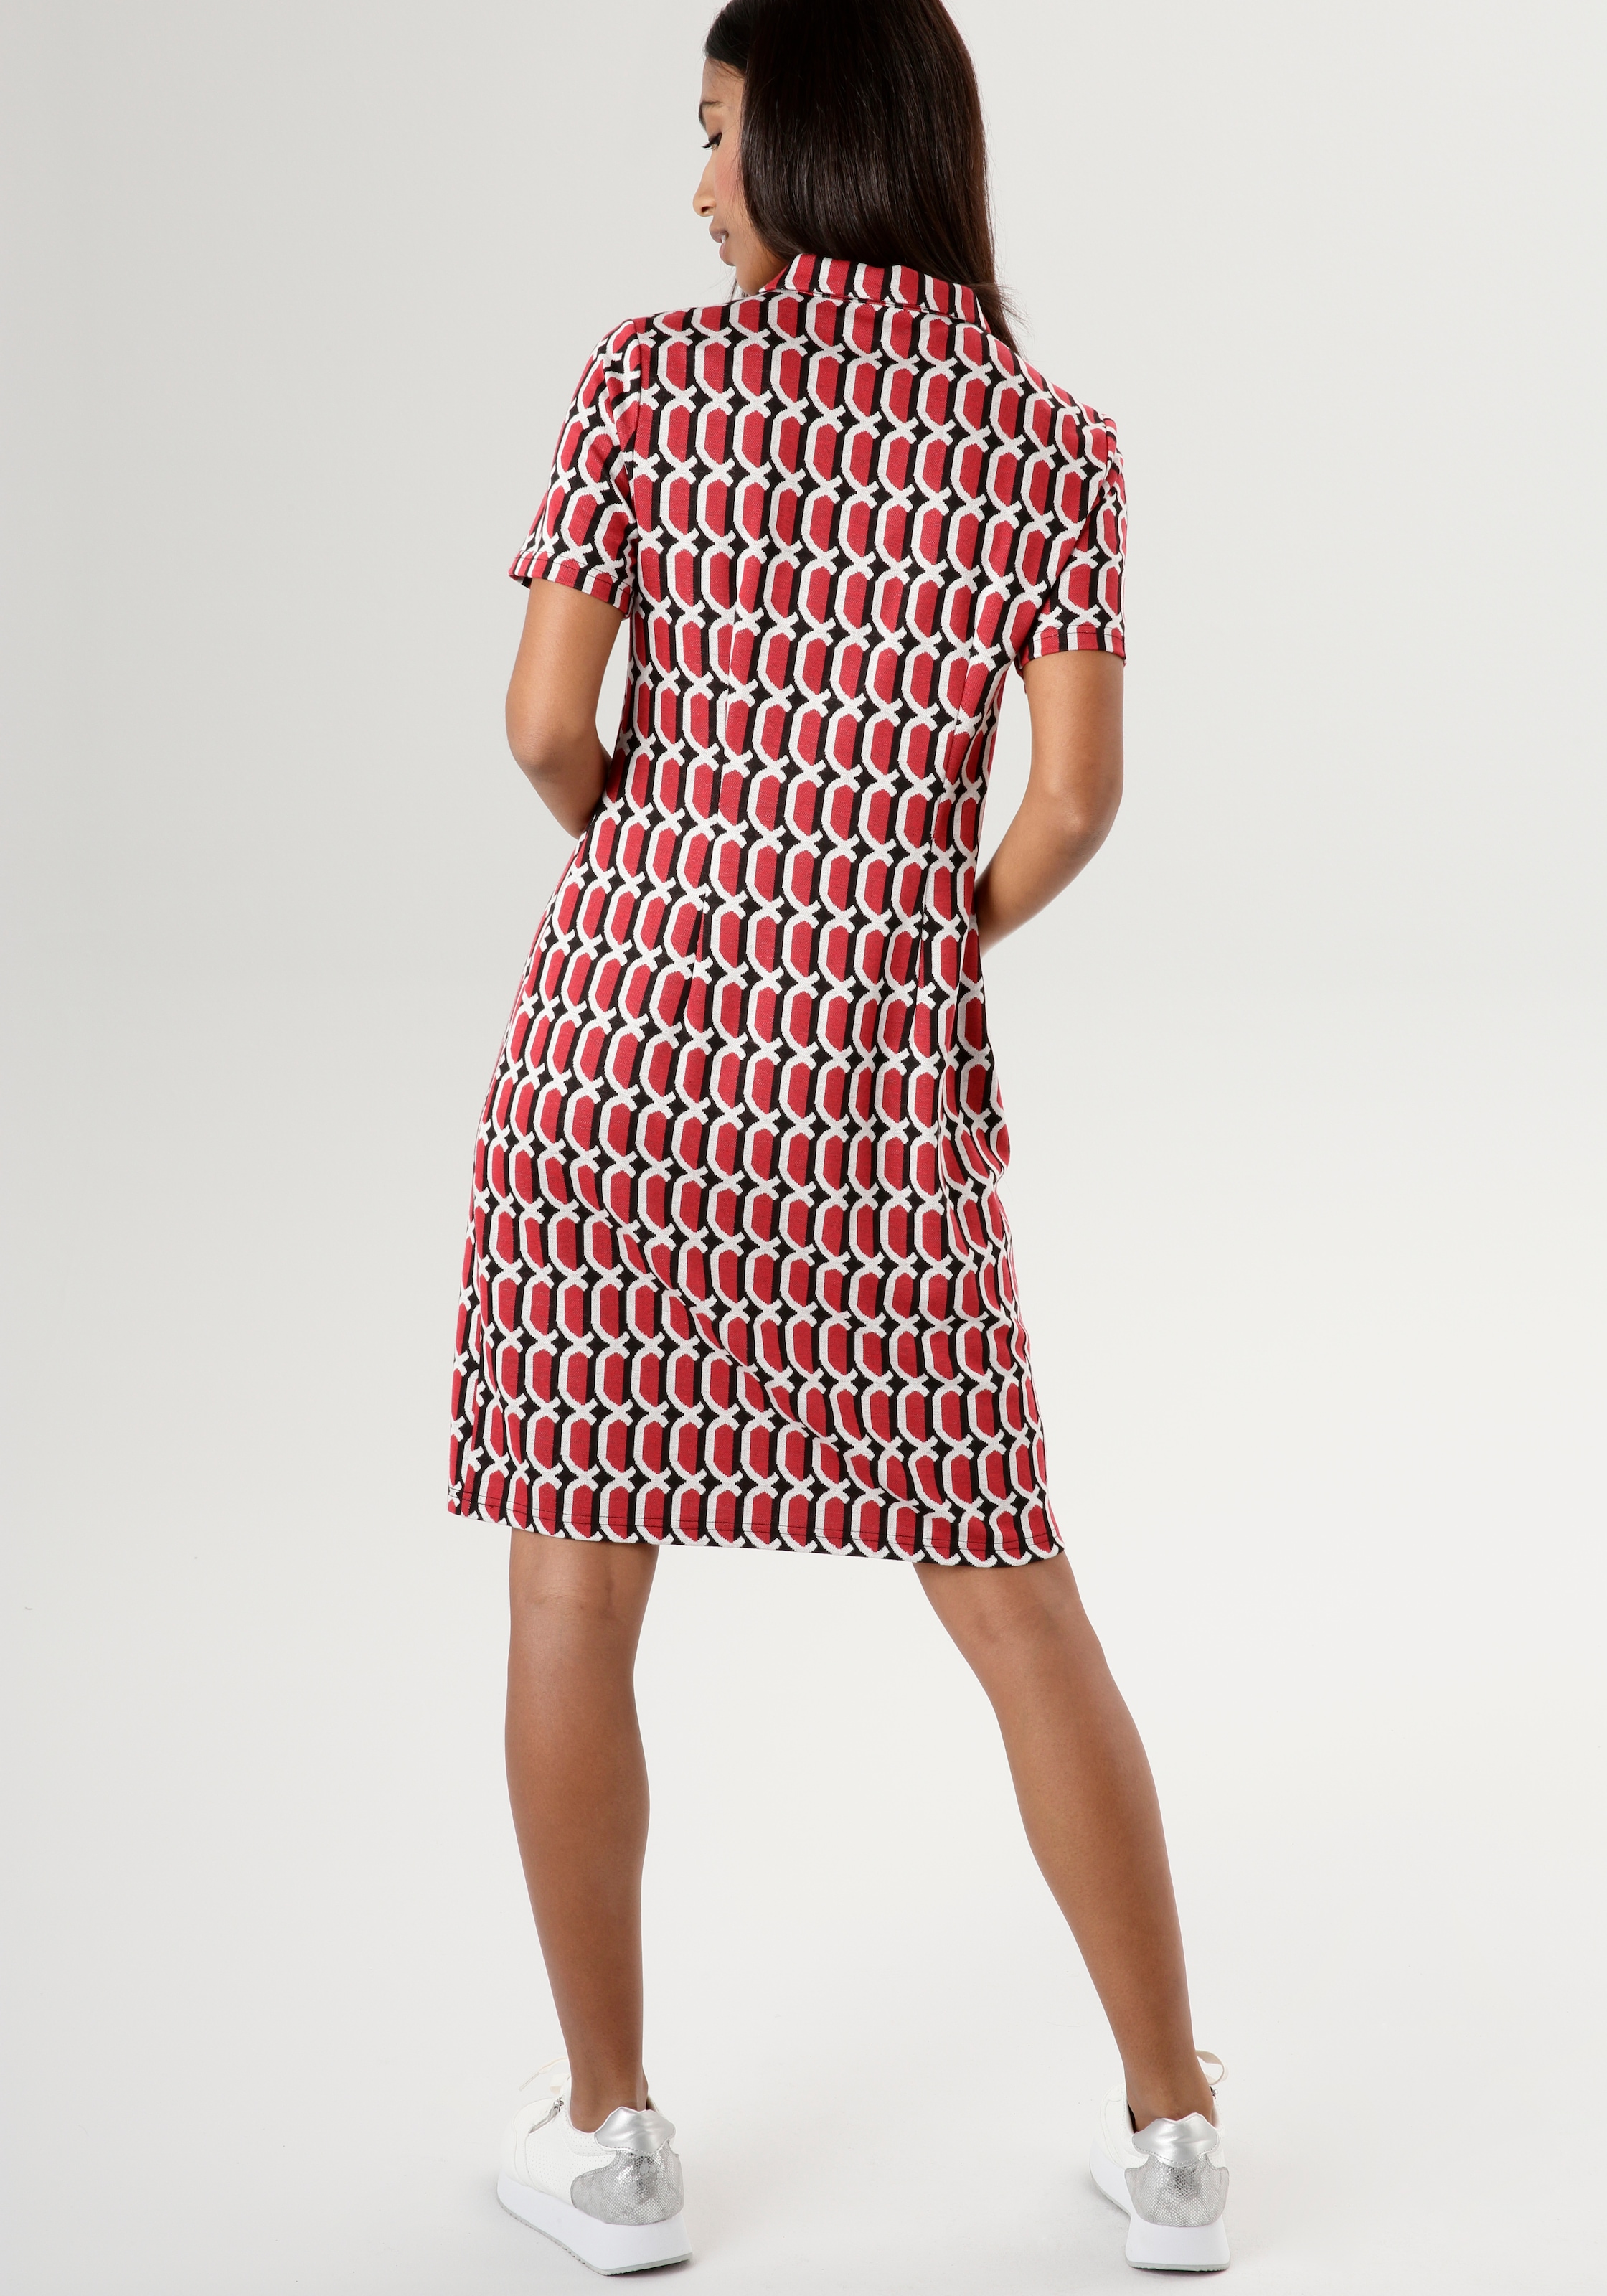 SELECTED - kaufen Reißverschluss KOLLEKTION mit NEUE silberfarbenem Aniston Jerseykleid,